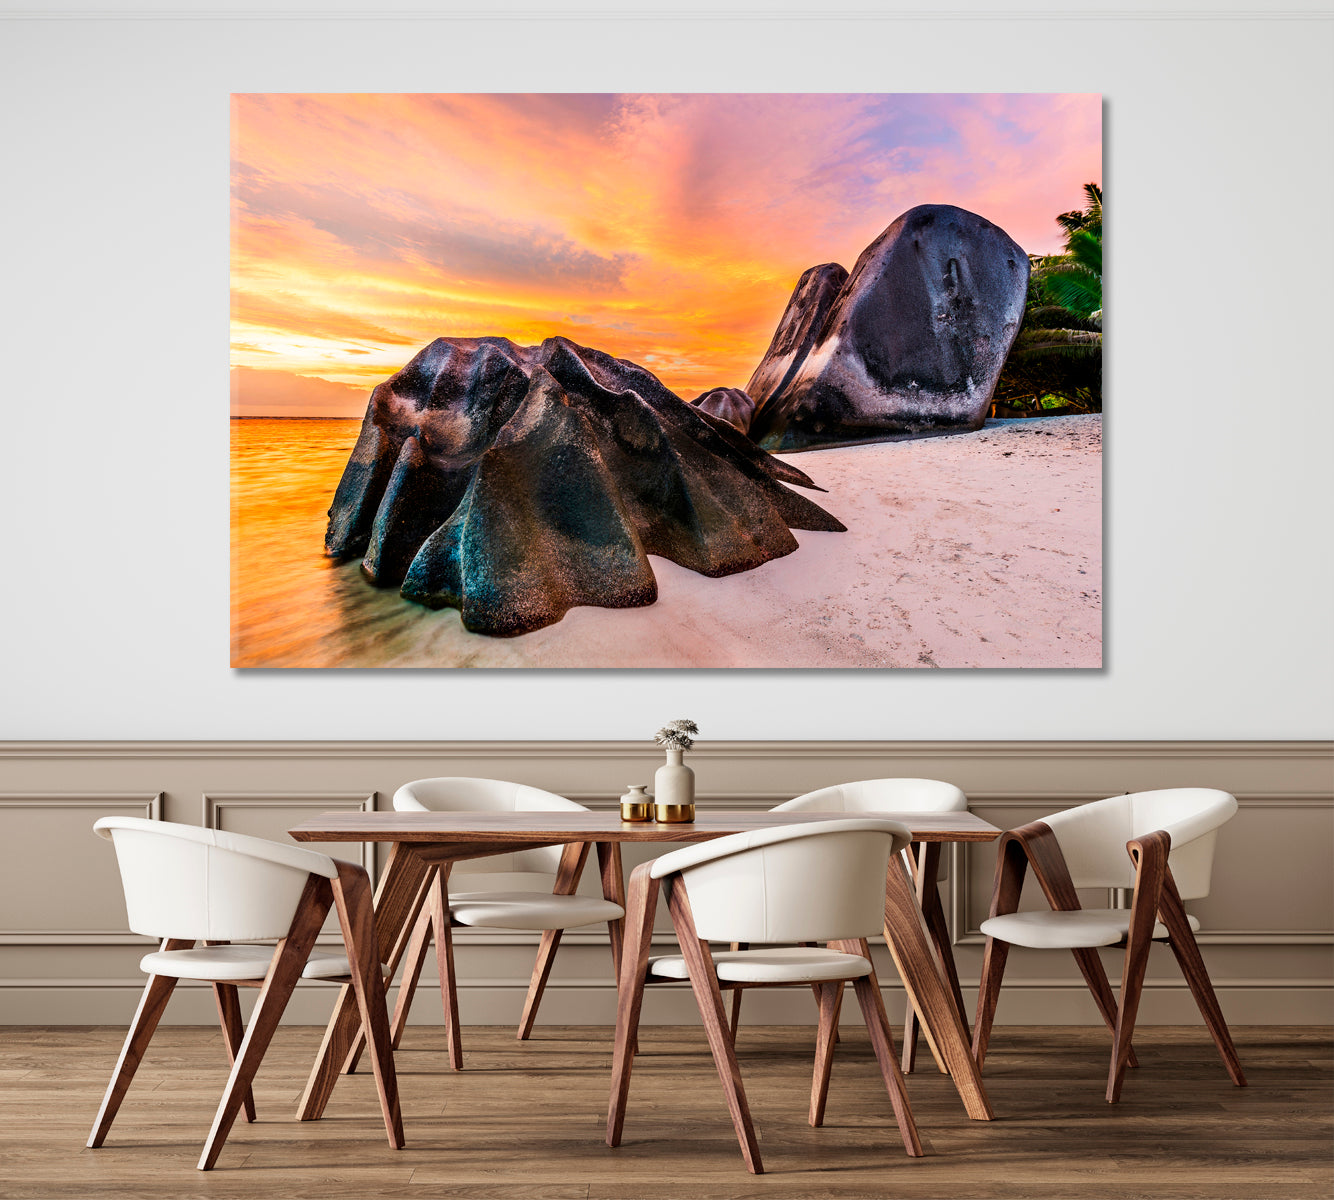 SEYCHELLES ISLAND Shaped Granite Boulders Sunset White Beach Scenery Landscape Fine Art Print Artesty 1 panel 24" x 16" 